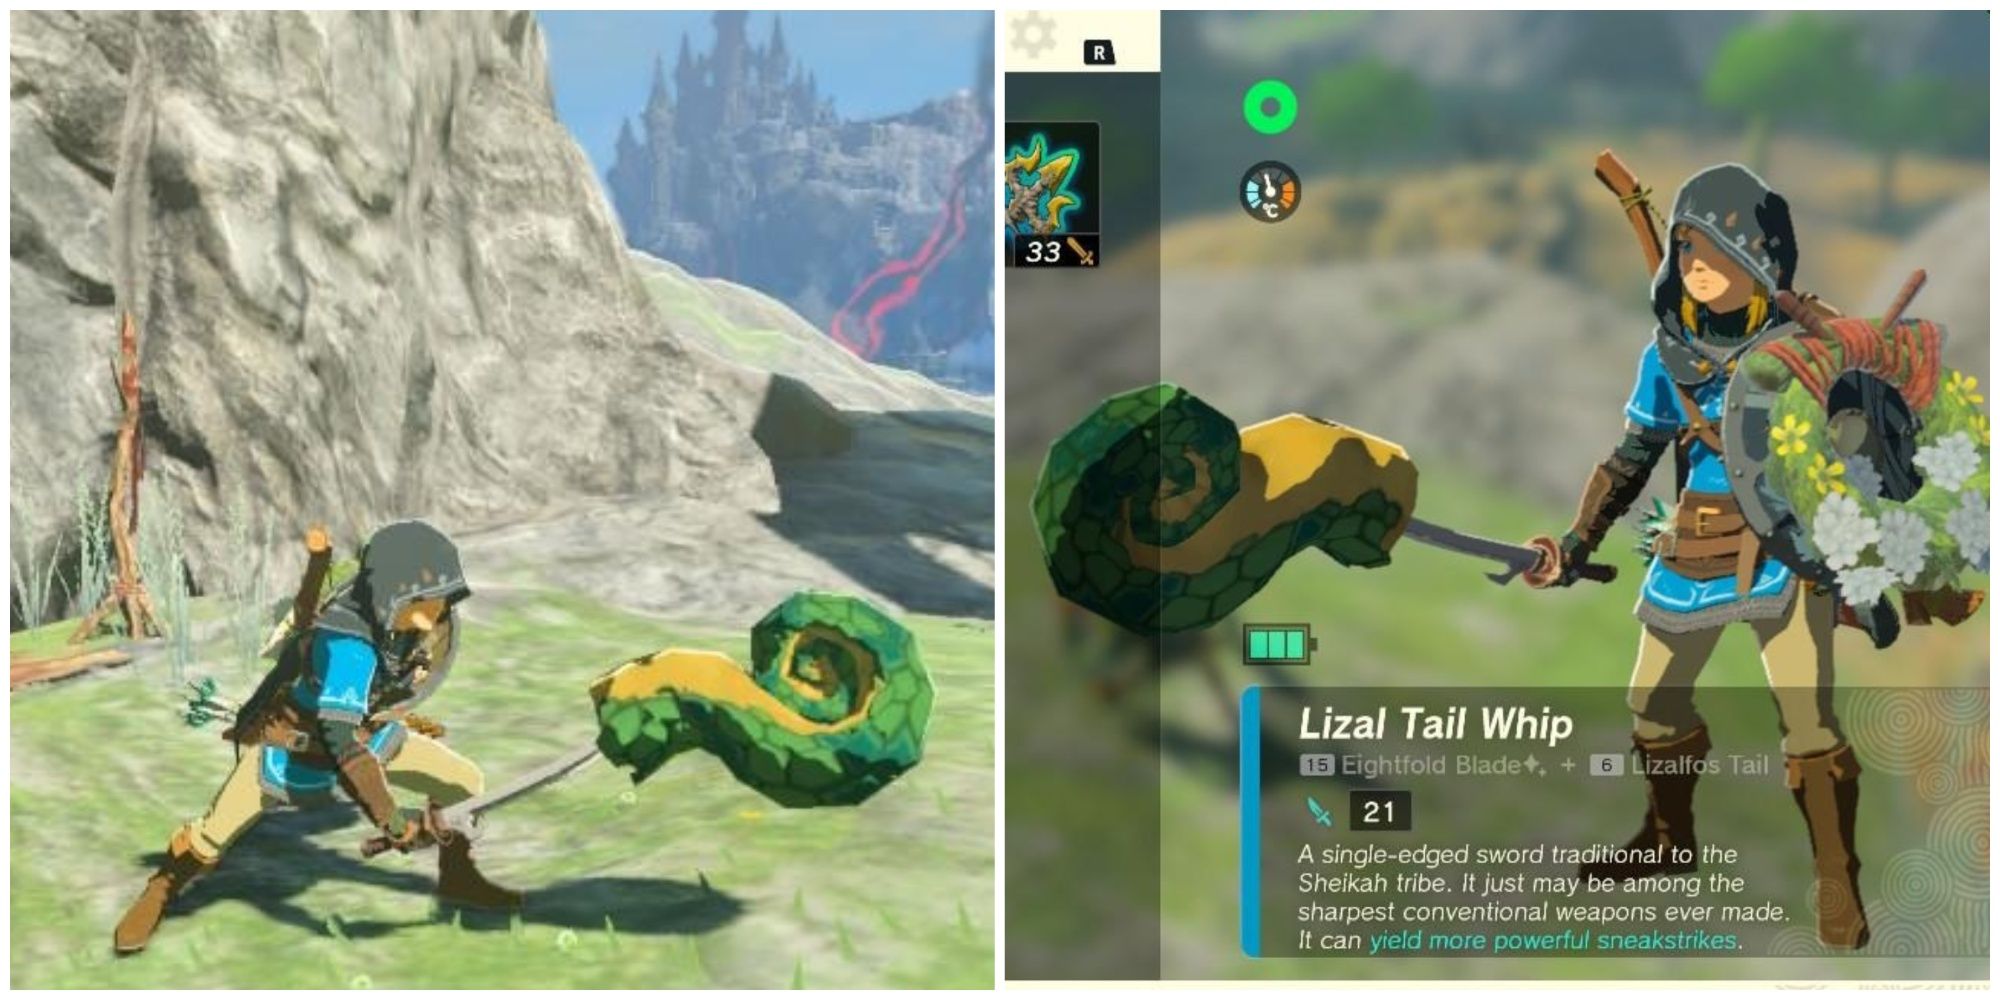 Link swings a whiplash